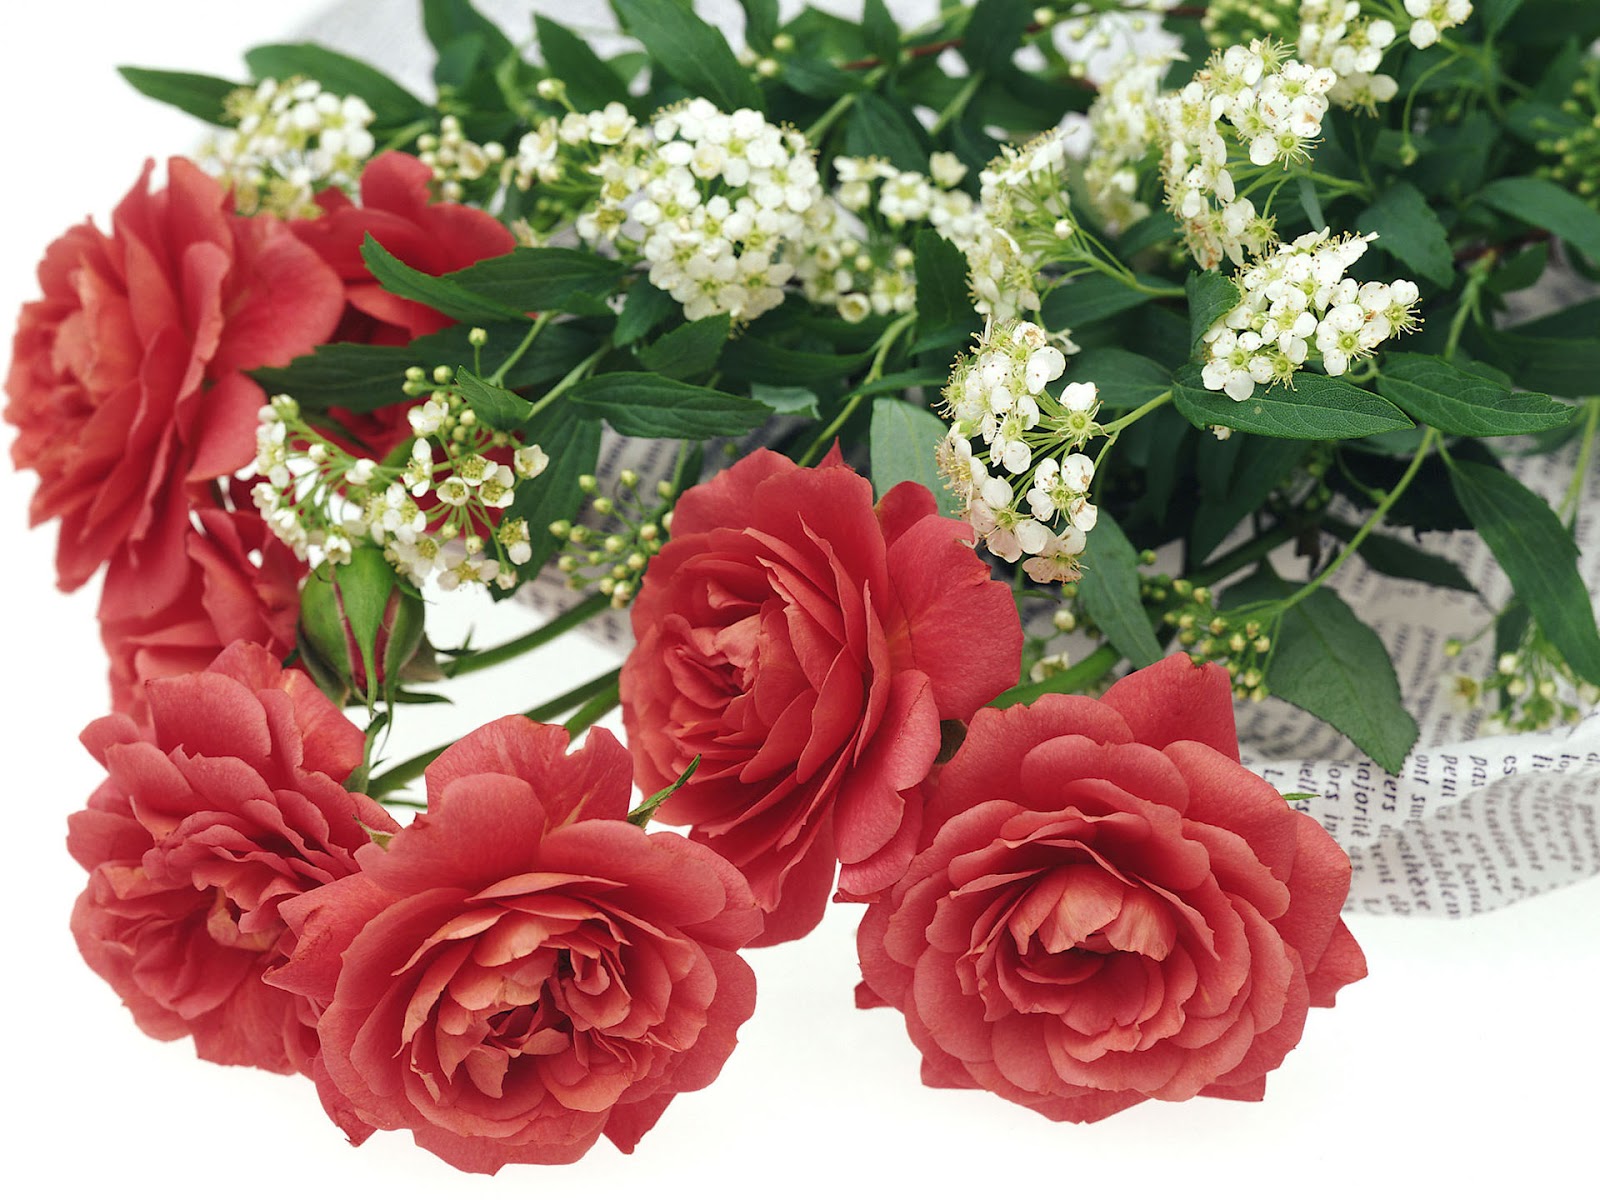 Romantic Flowers: Romantic Flowers